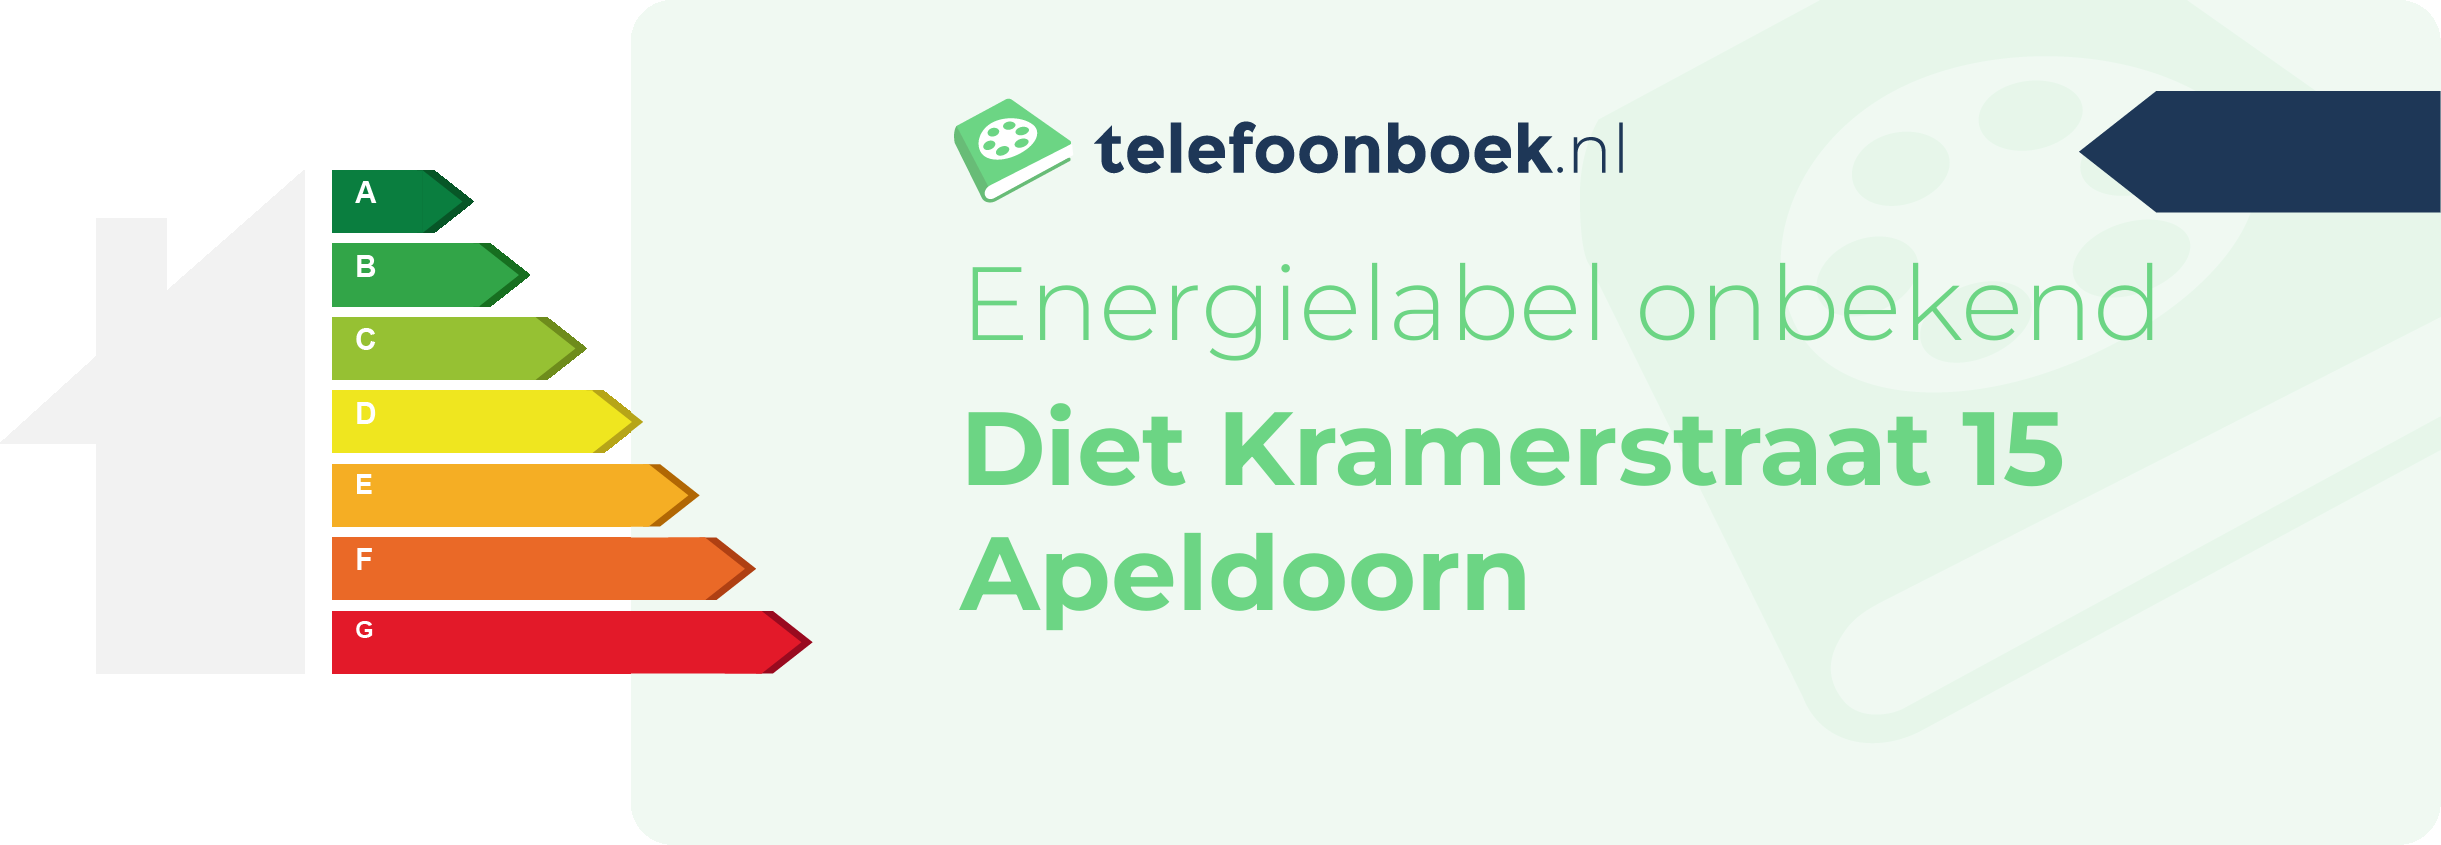 Energielabel Diet Kramerstraat 15 Apeldoorn